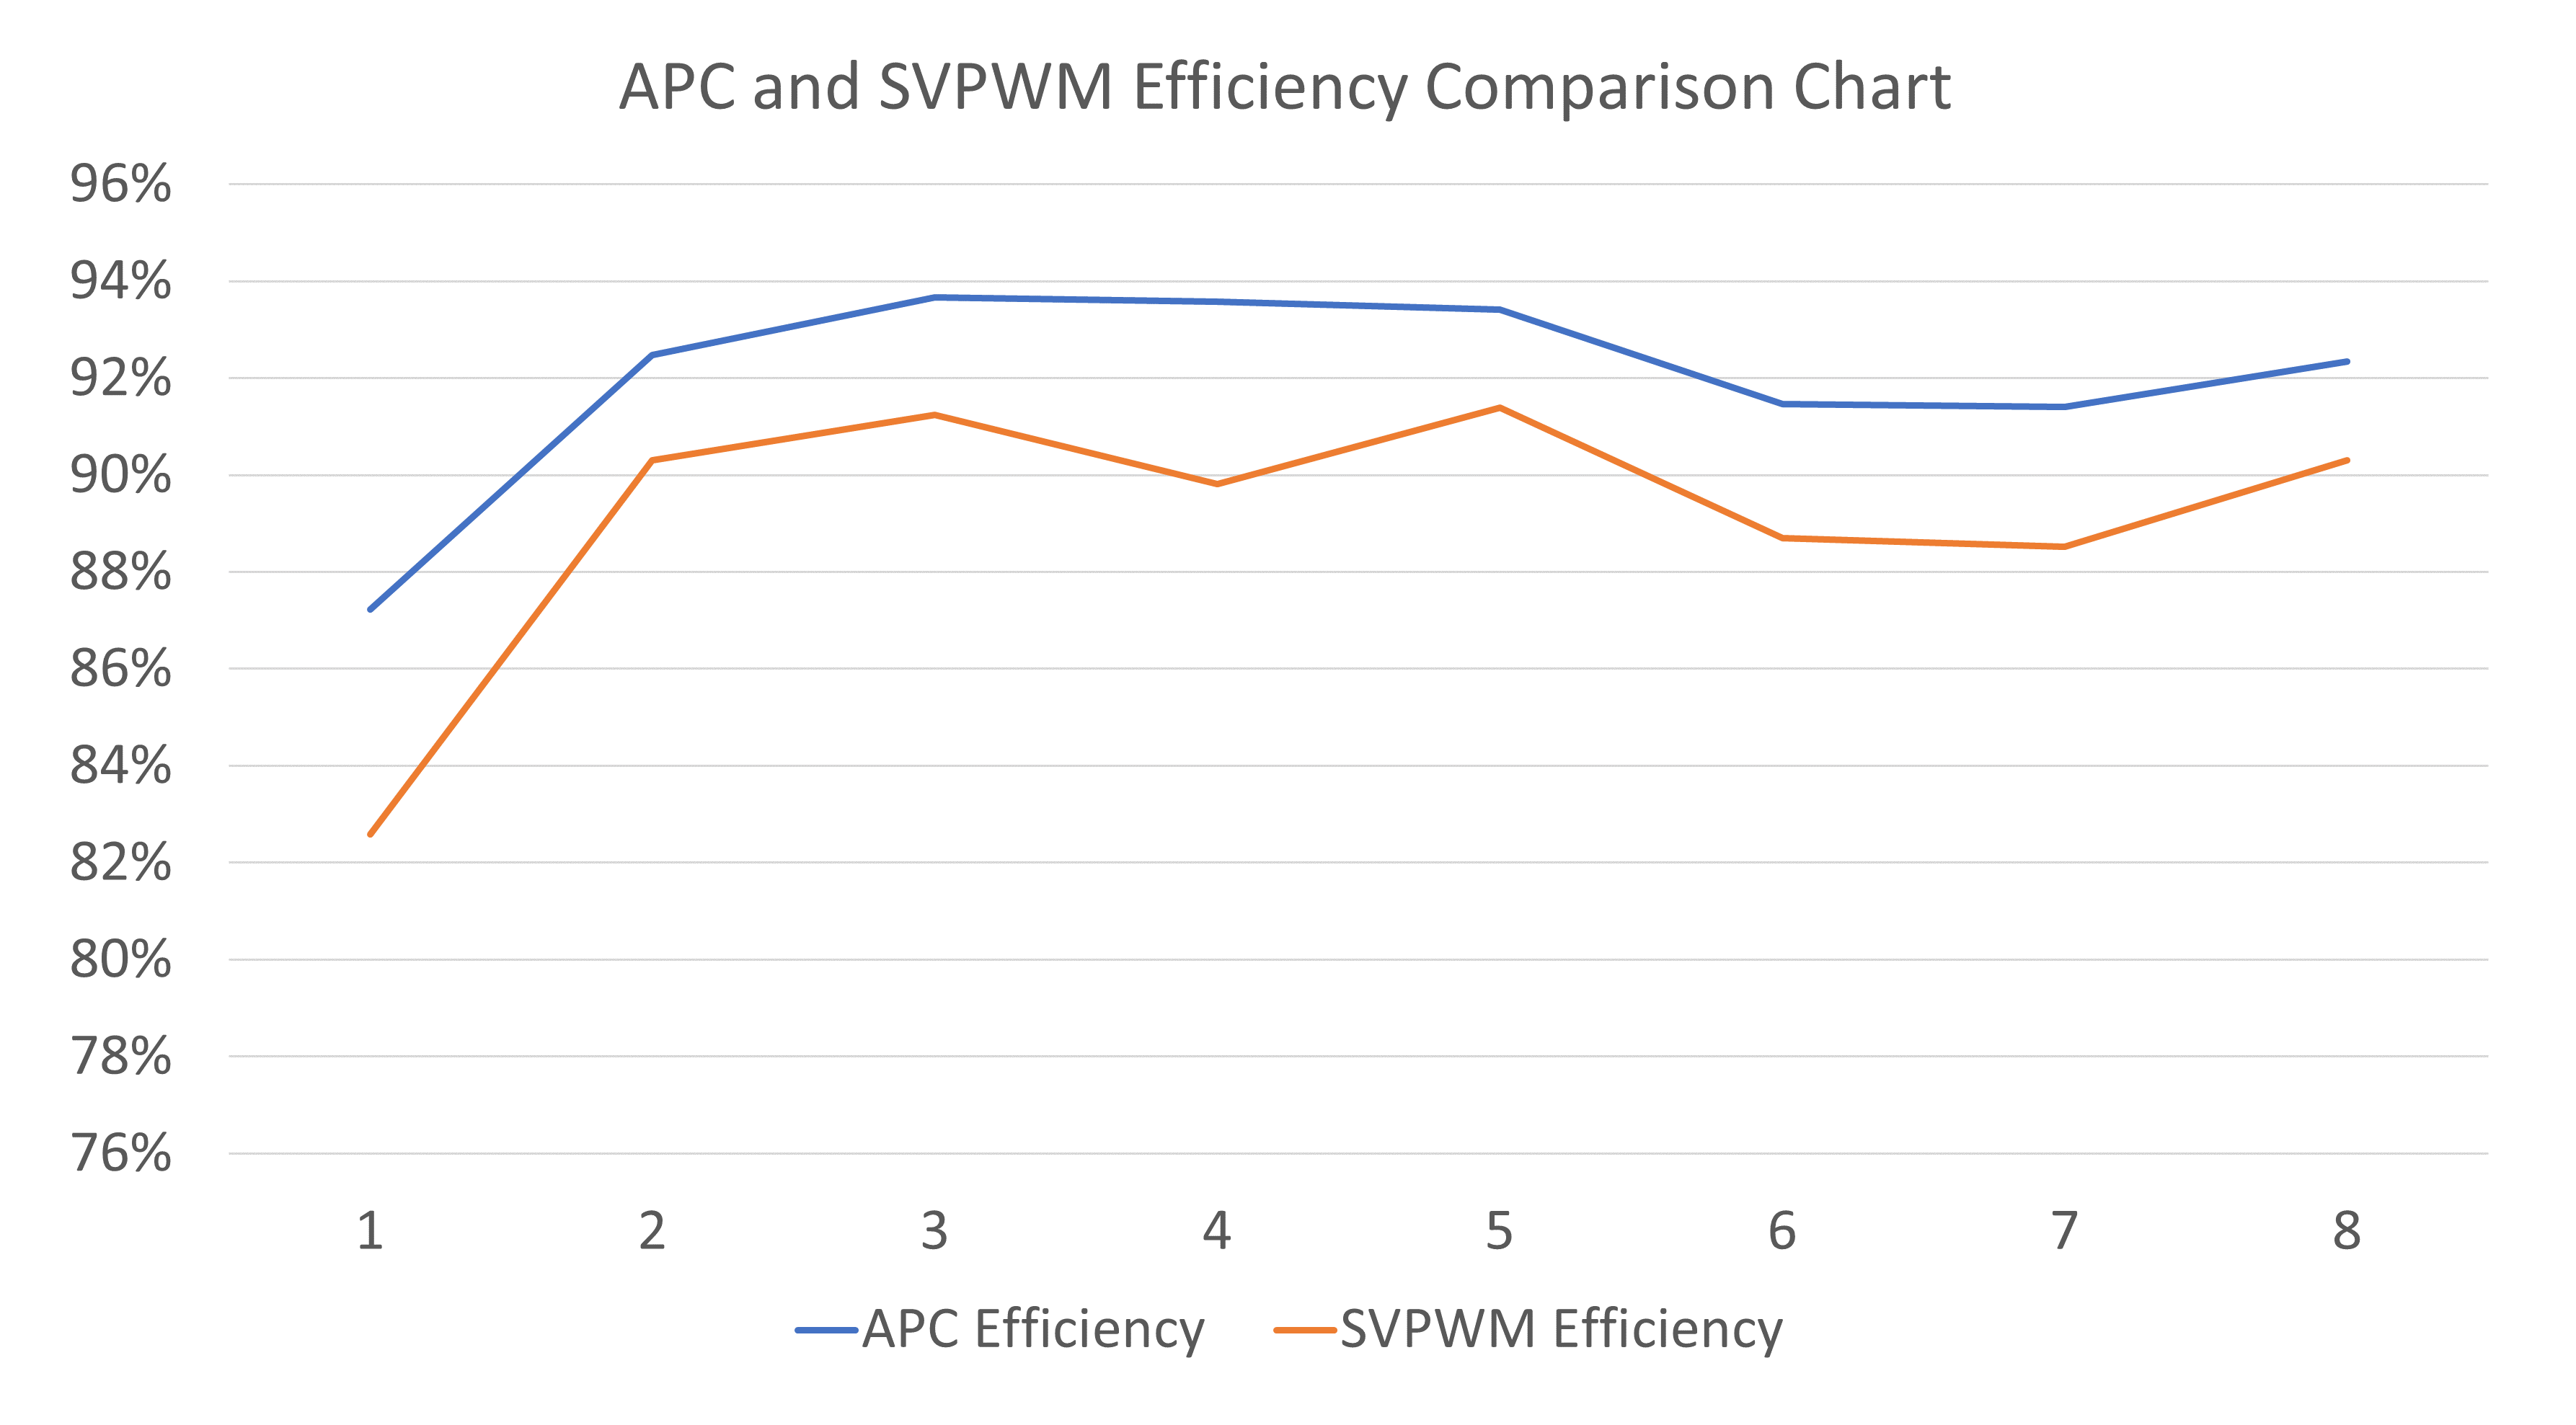 APC and SVPWM efficiency comparison chart